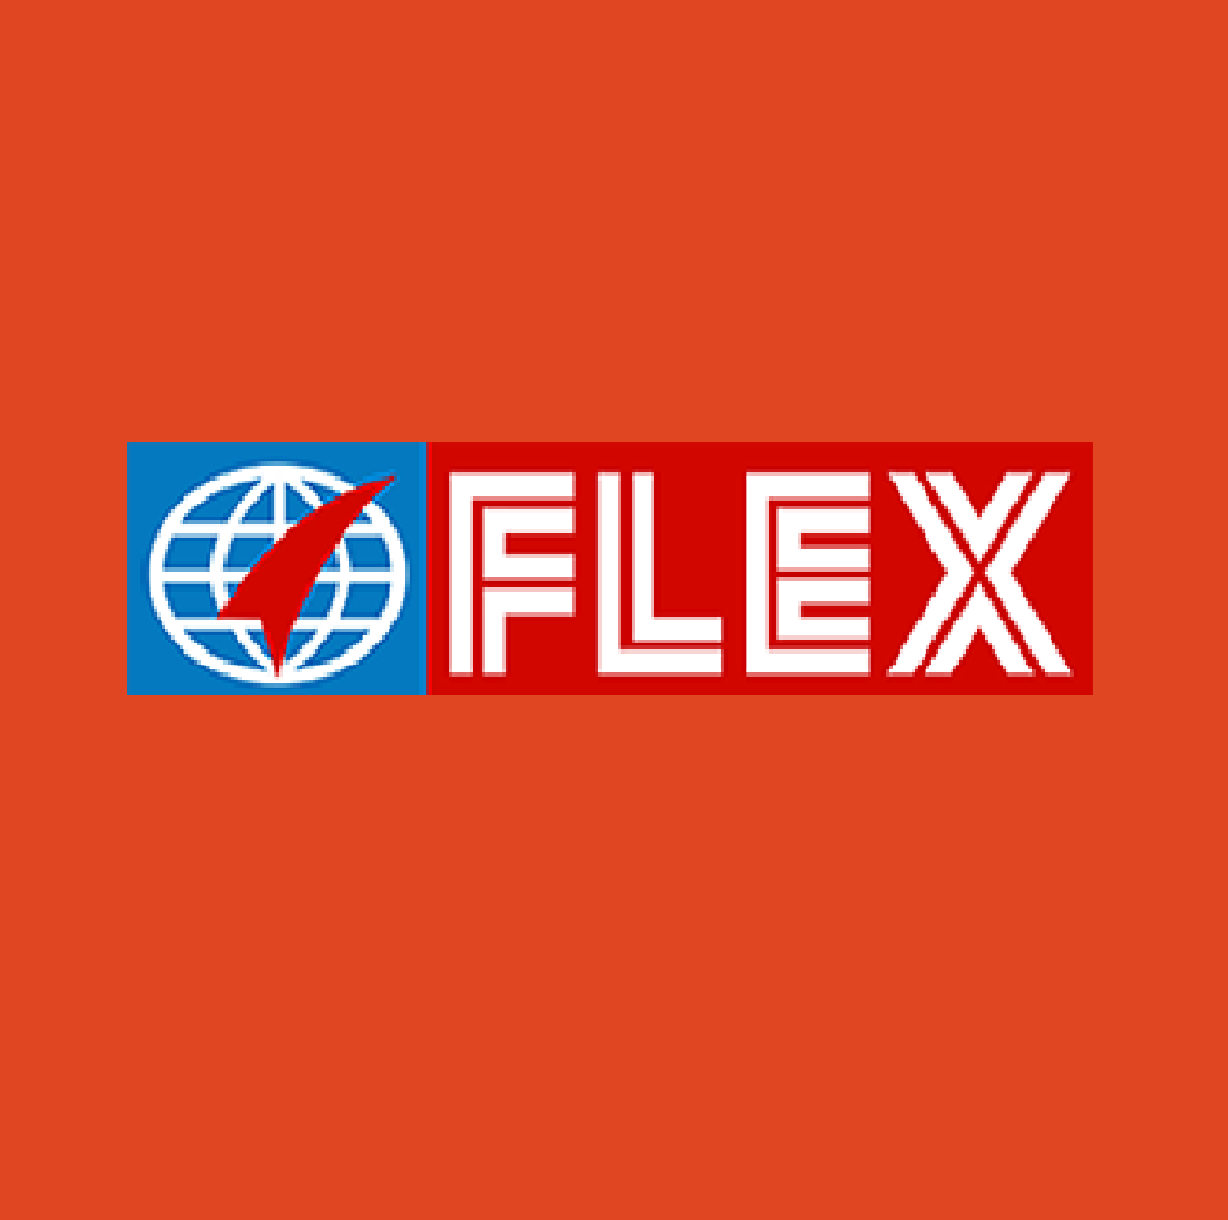 Flexfilm